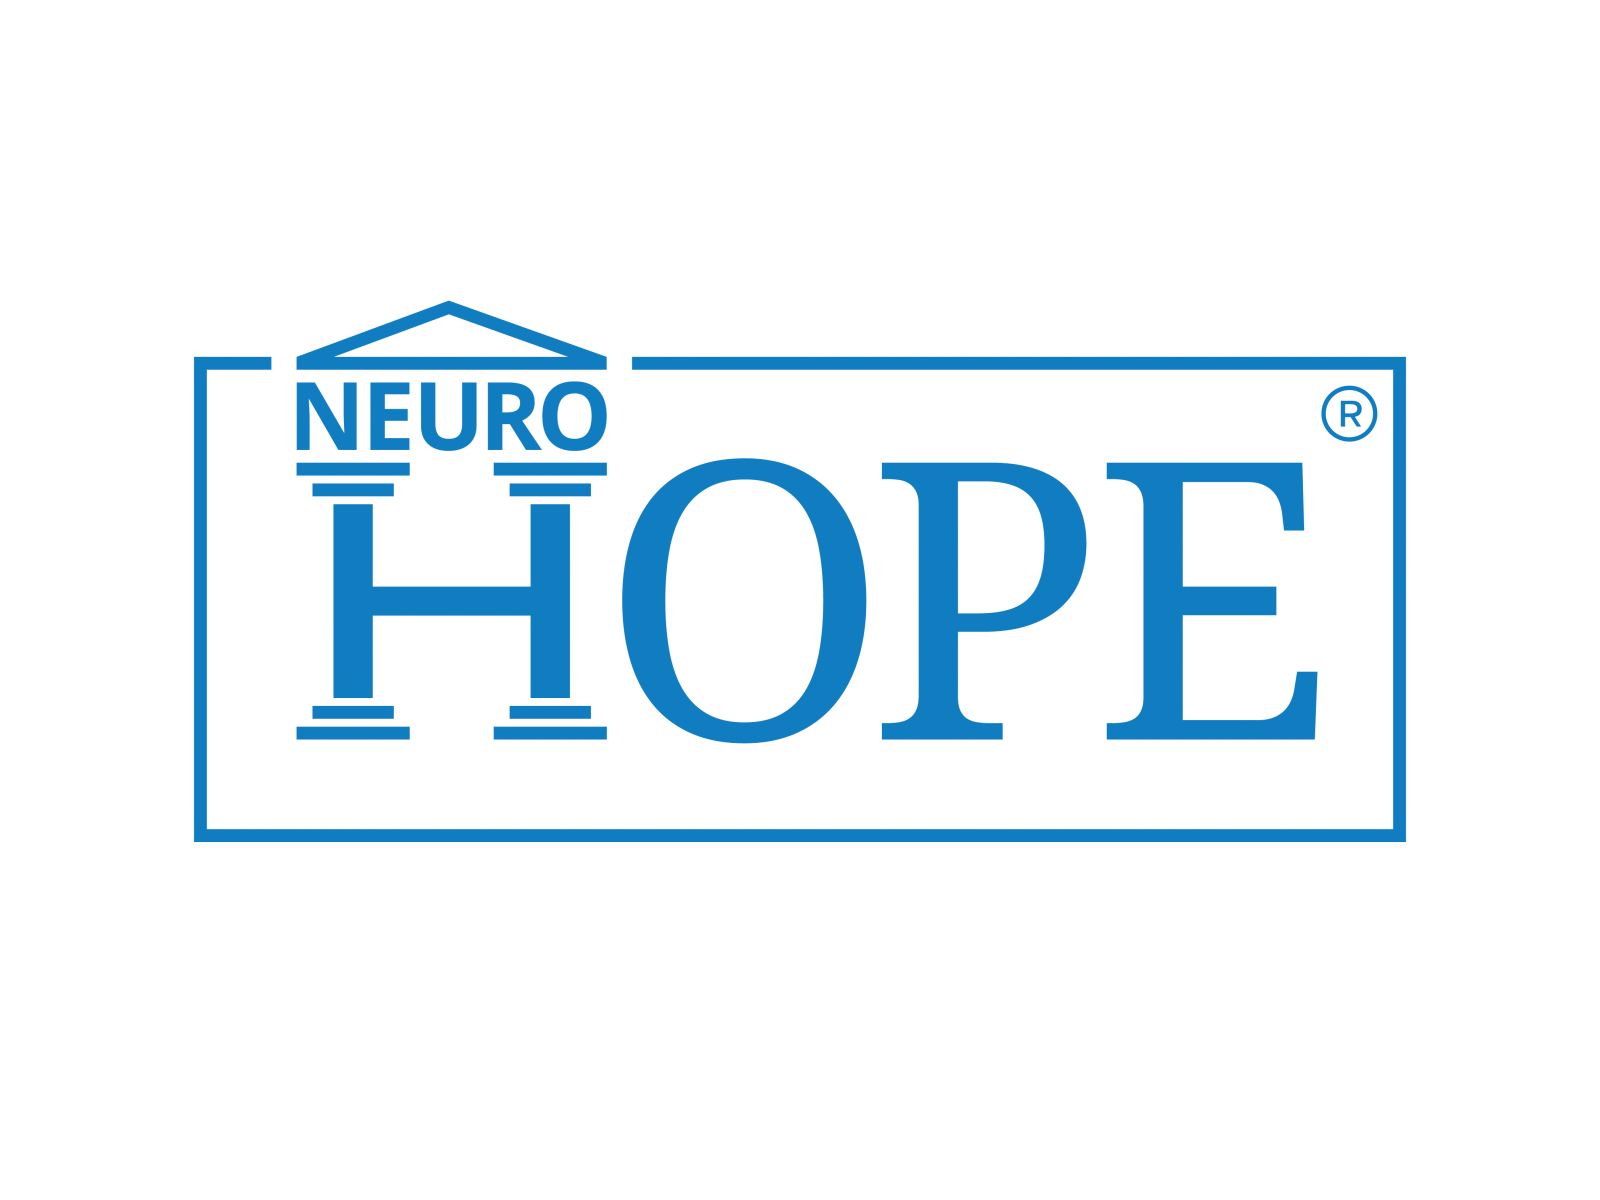 NeuroHope - Logo_Background_Alb.png